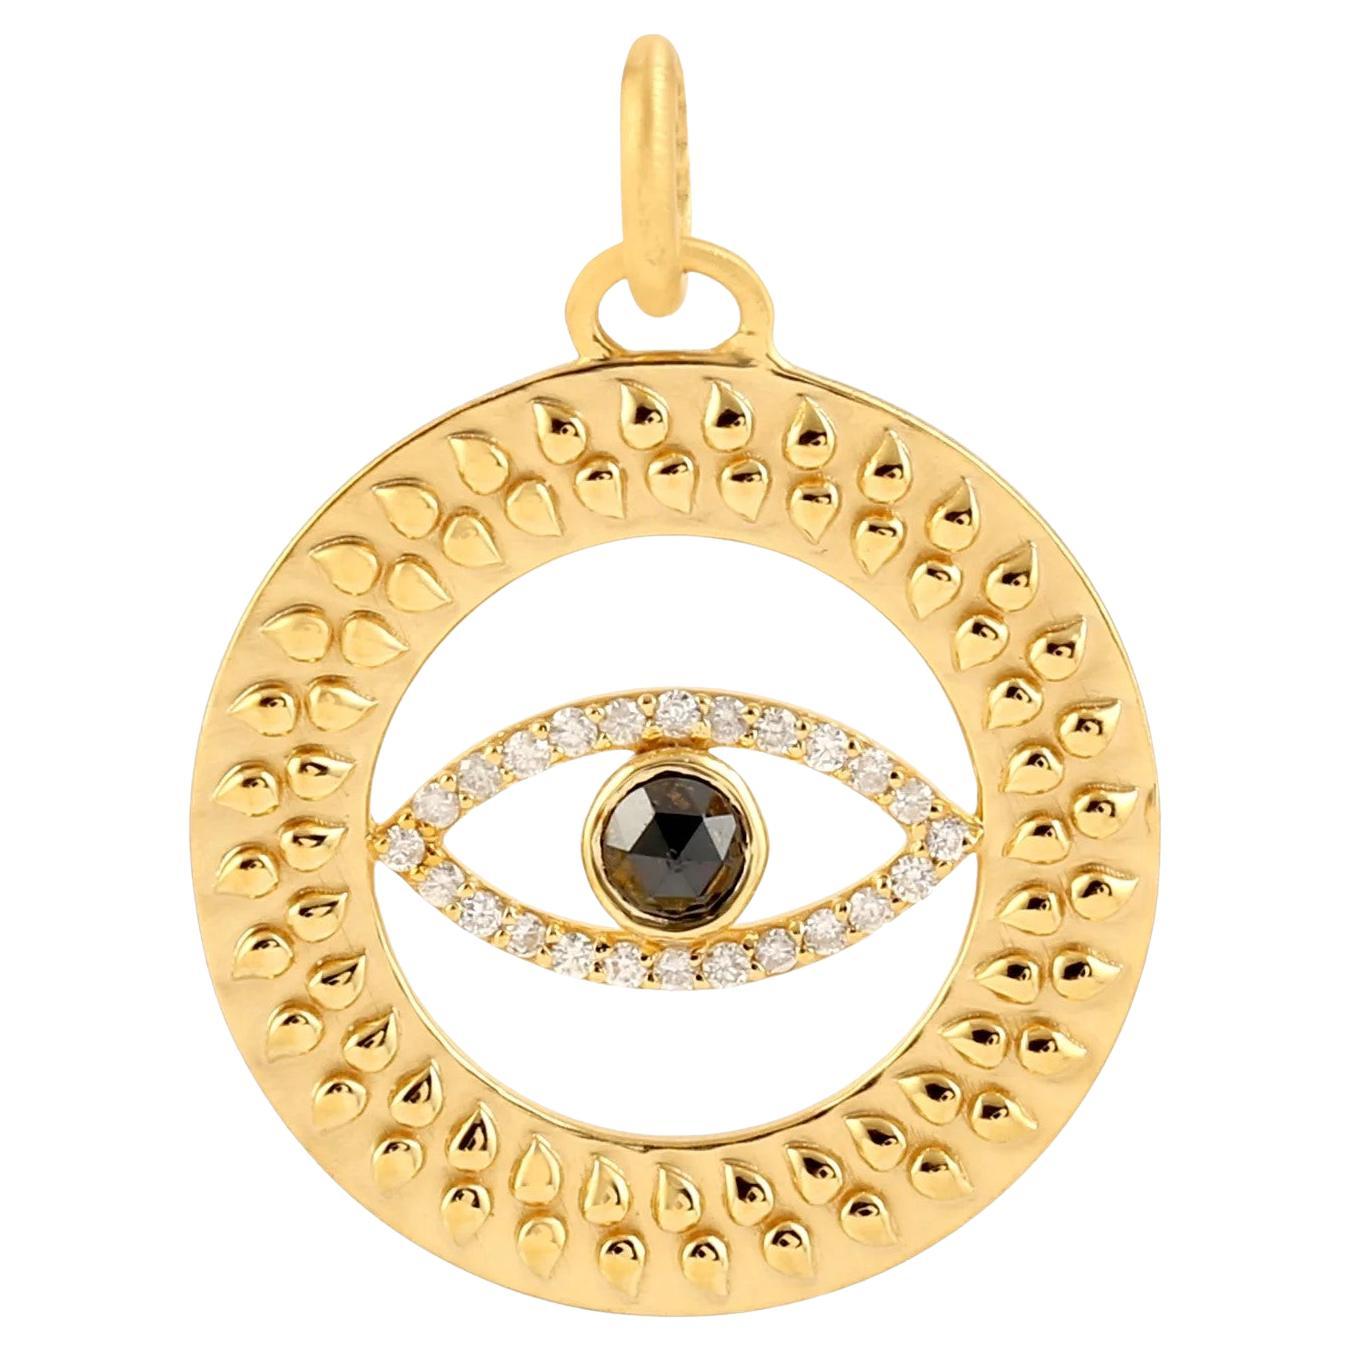 Meghna Jewels Evil Eye Medallion Charm 14K Yellow Gold Pendant Necklace